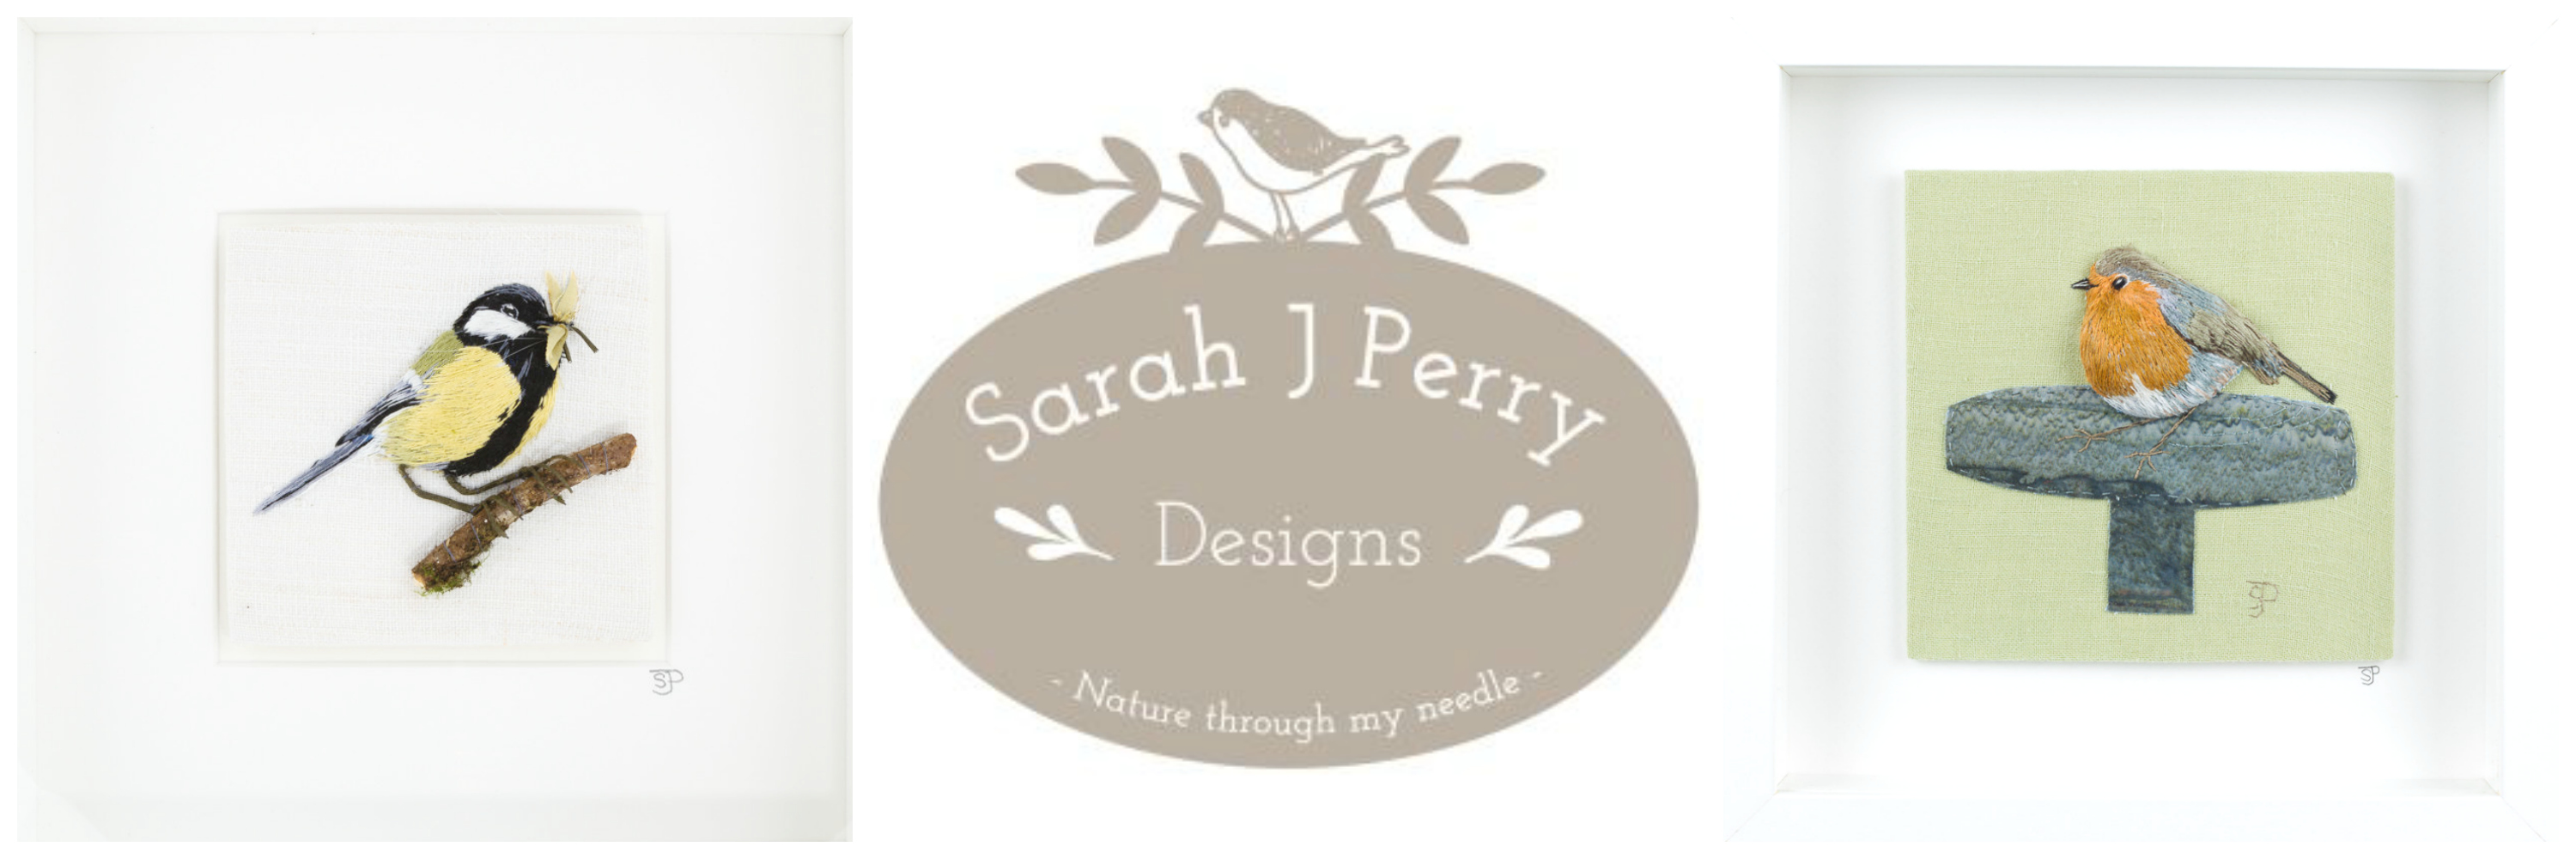 Sarah J Perry Designs